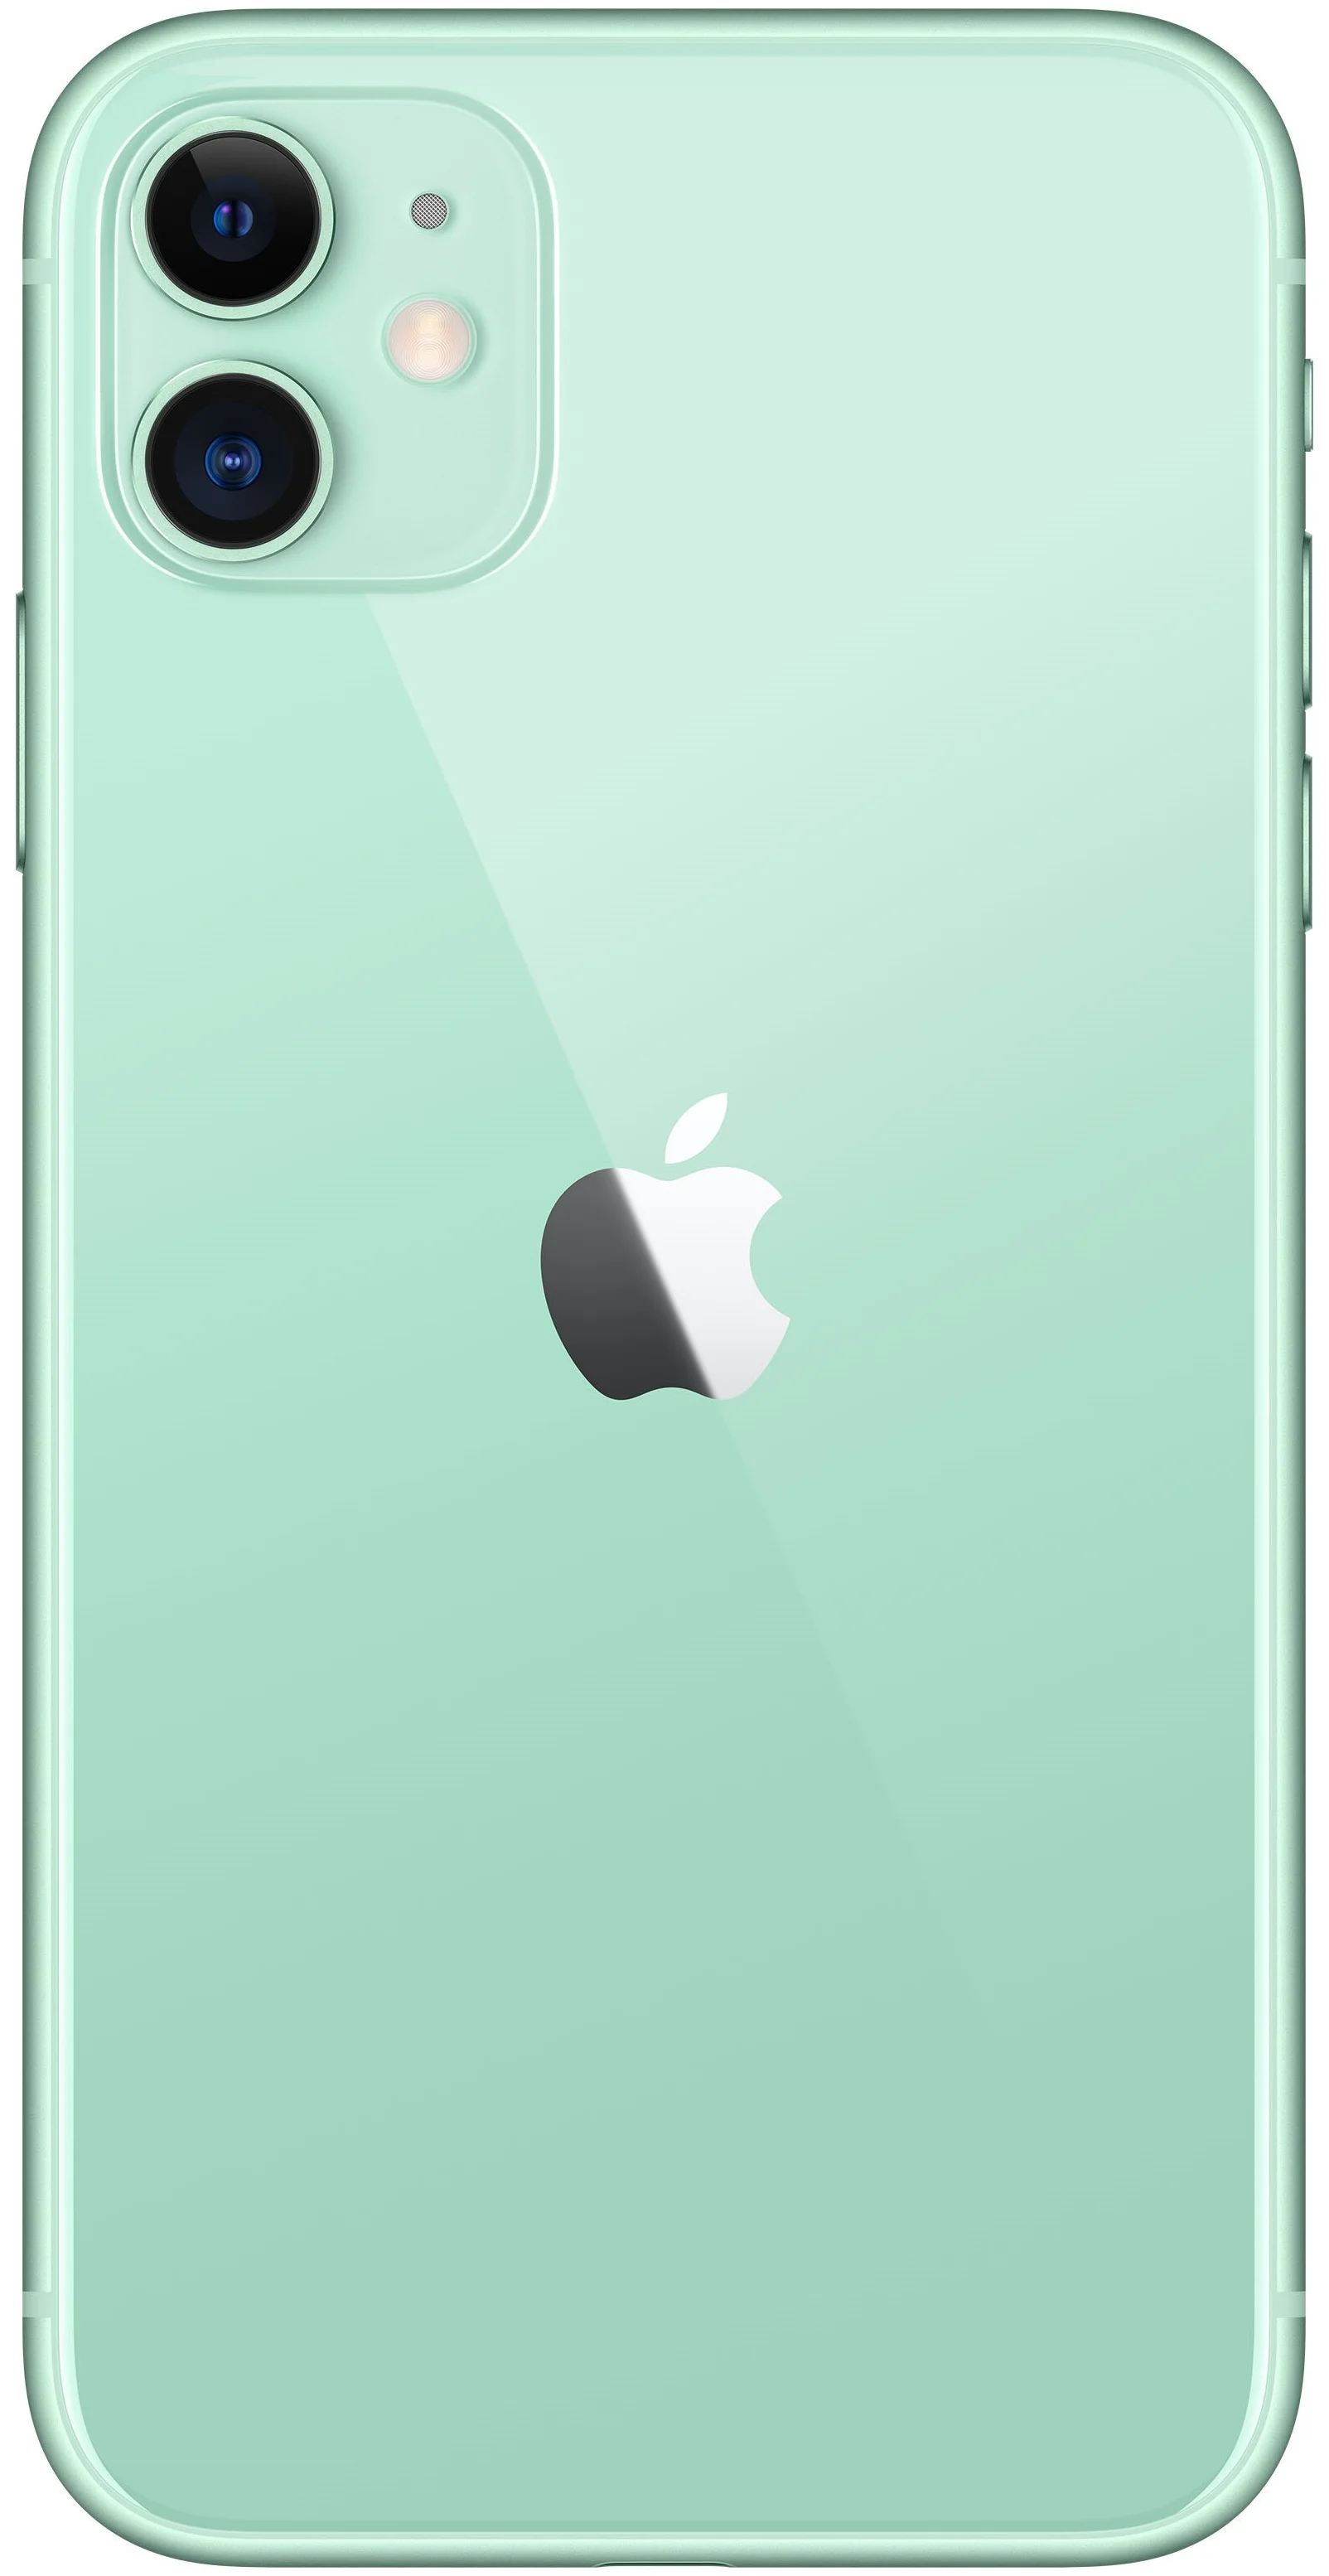 Apple iPhone 11 128GB - степень защиты: IP68